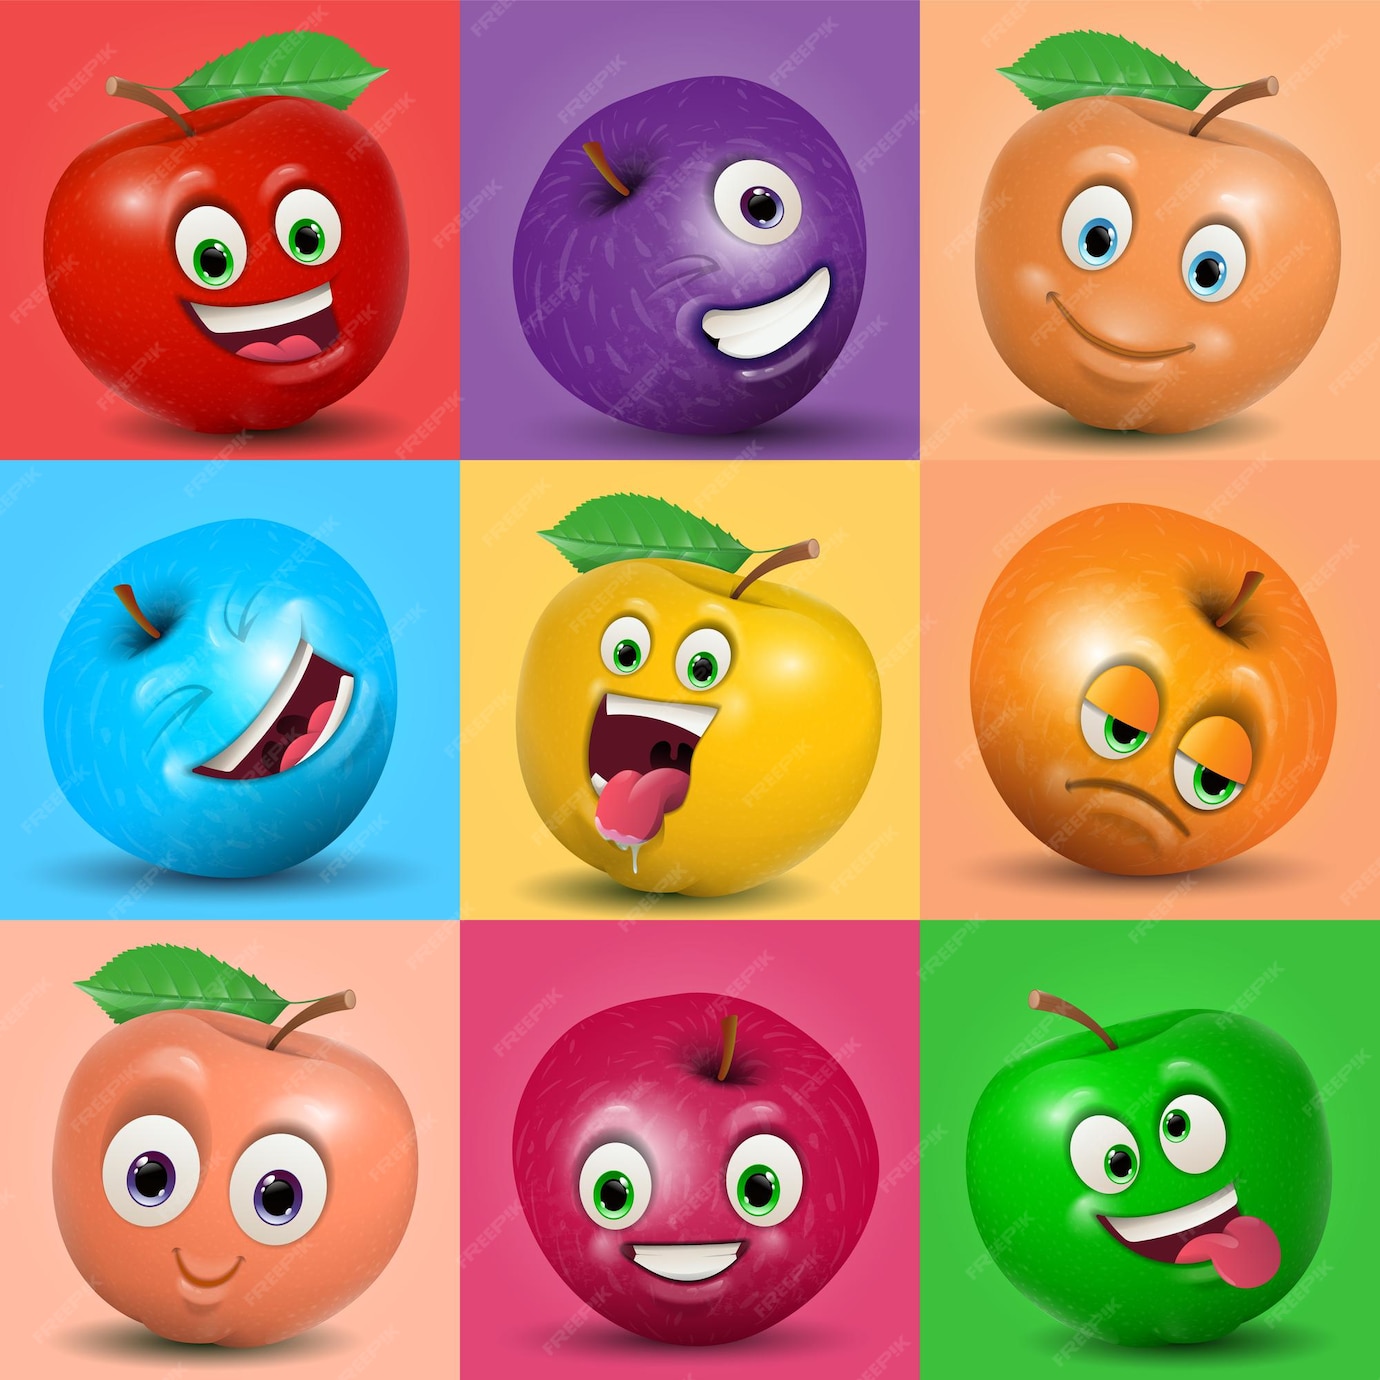 Premium Vector Set Cartoon Cute Colorful Apple Characters